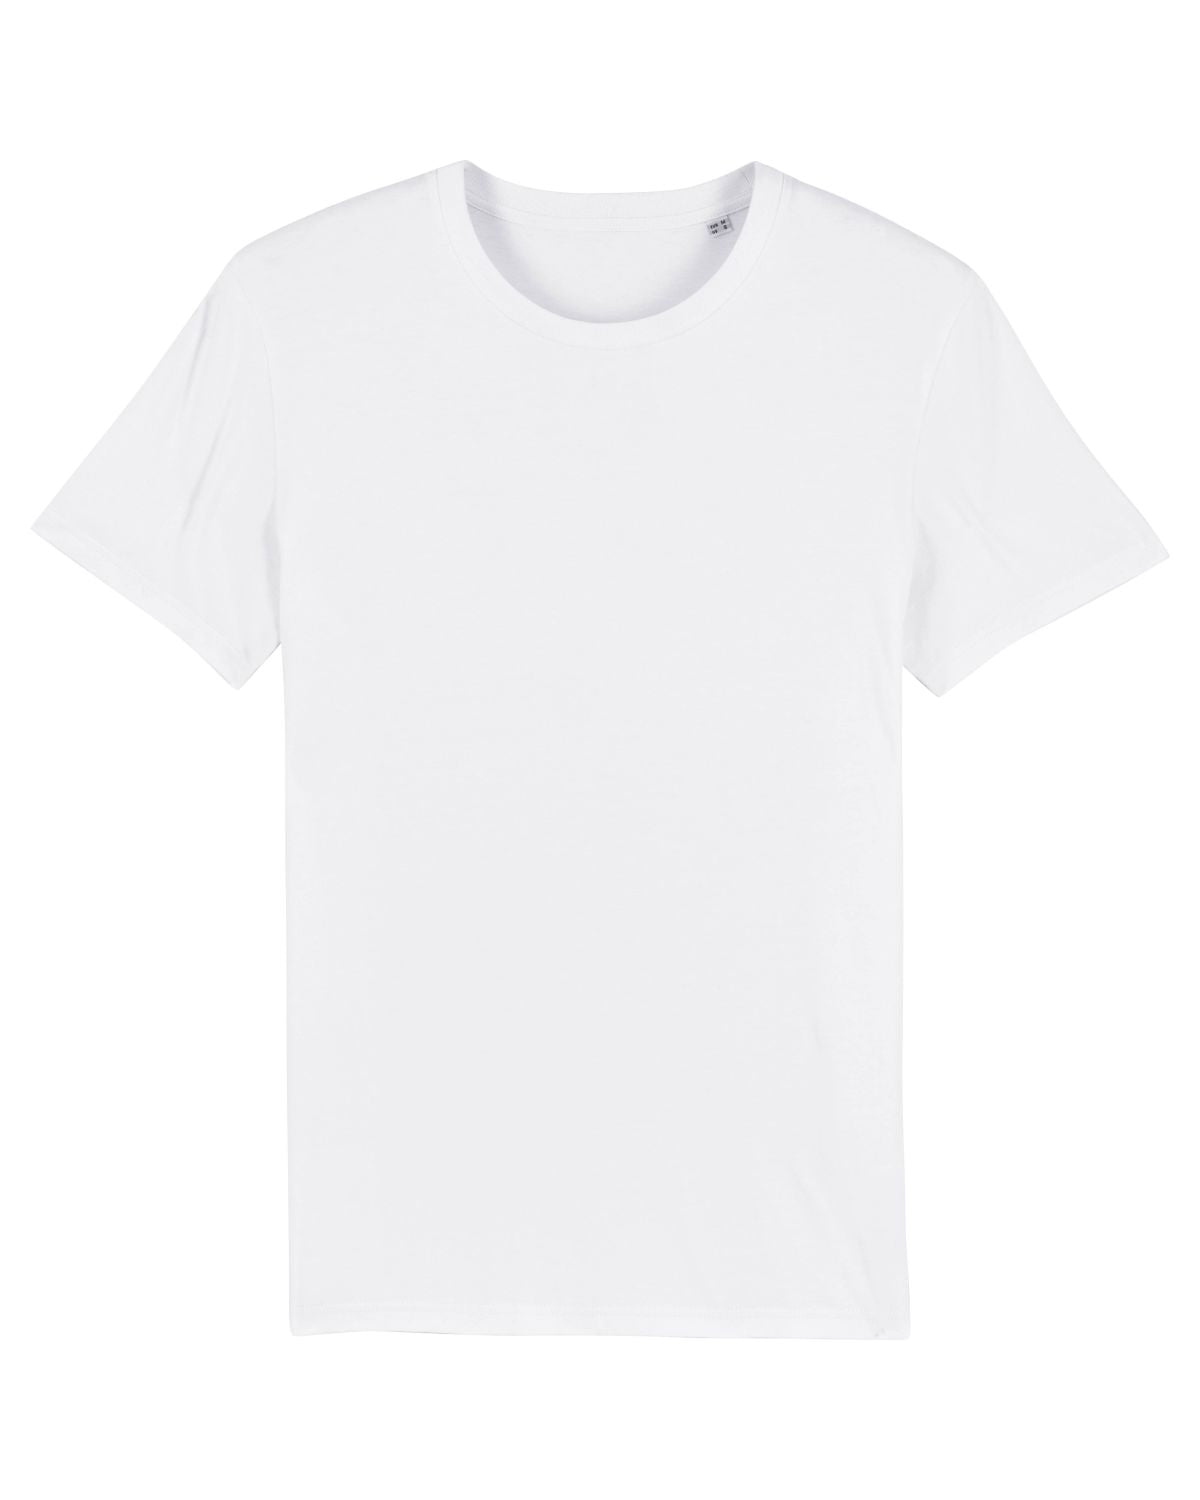 Stanley/Stella's - Creator T-shirt - White